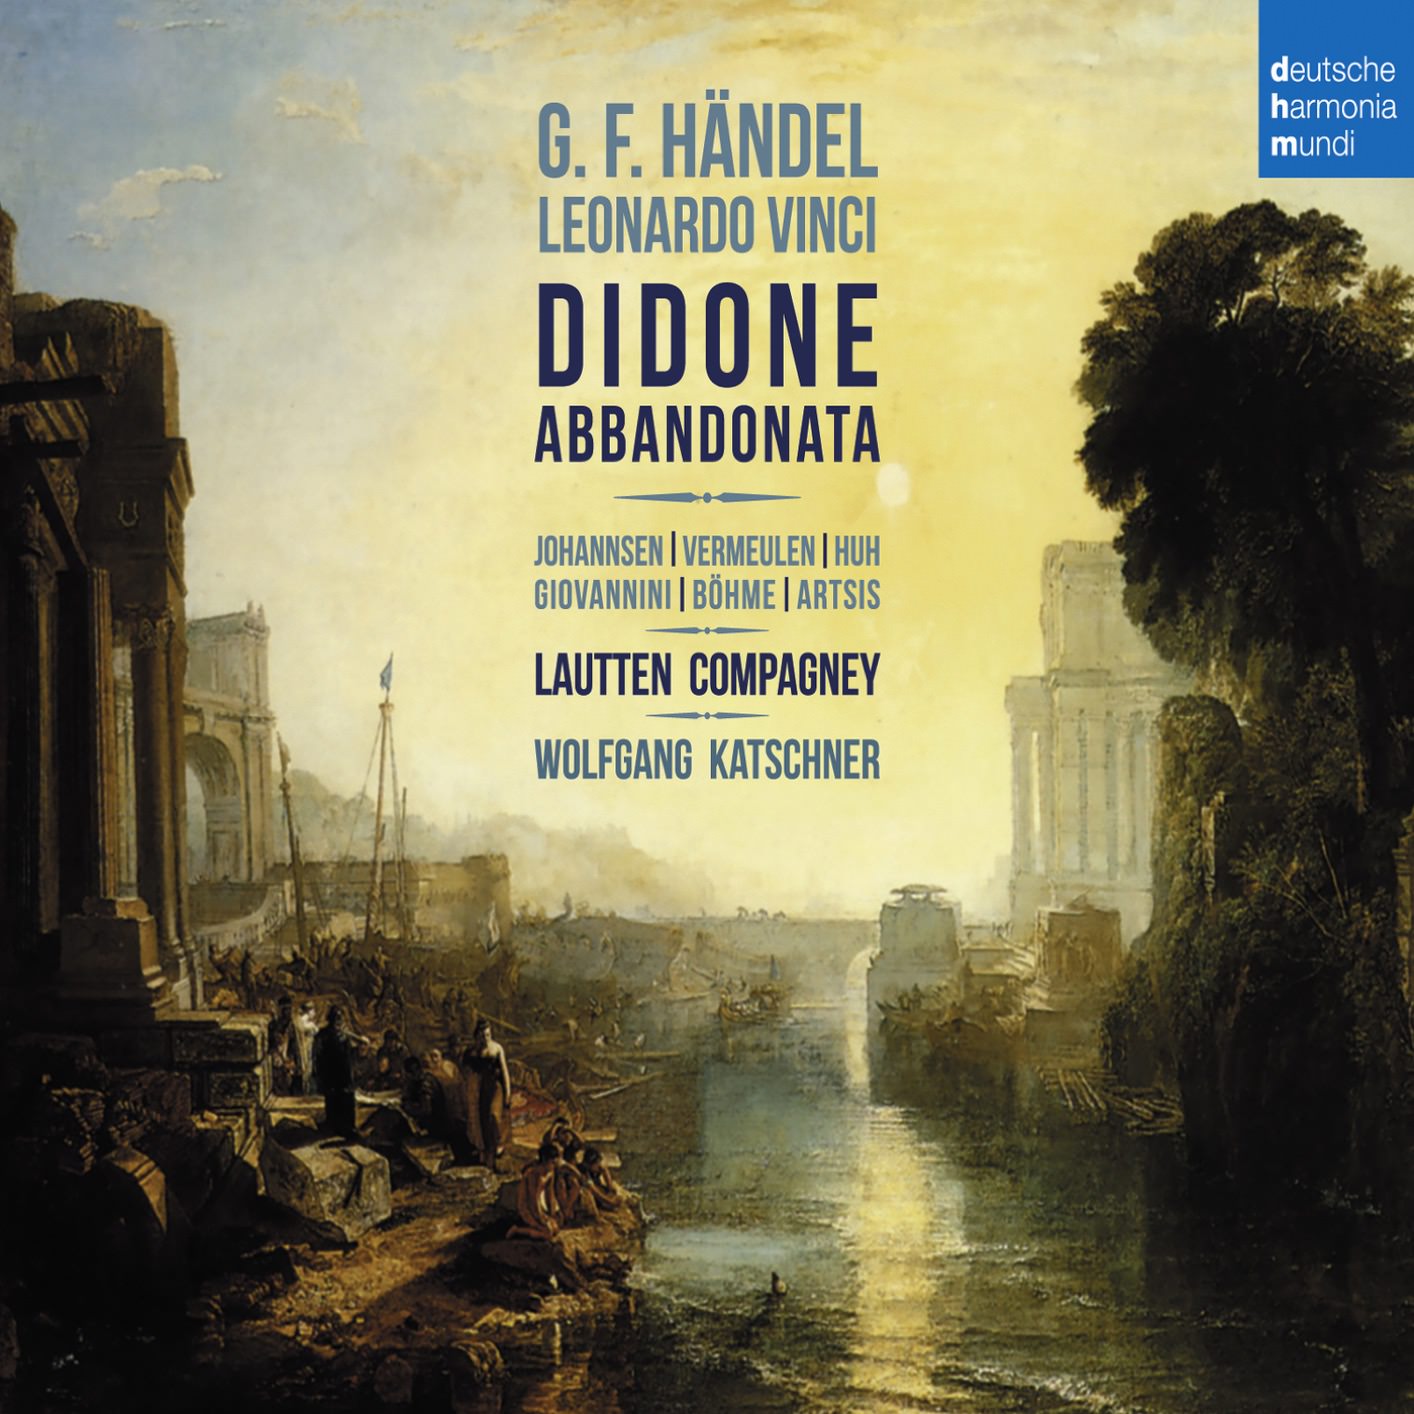 Lautten Compagney – Handel, Vinci: Didone abbandonata (2018) [FLAC 24bit/48kHz]